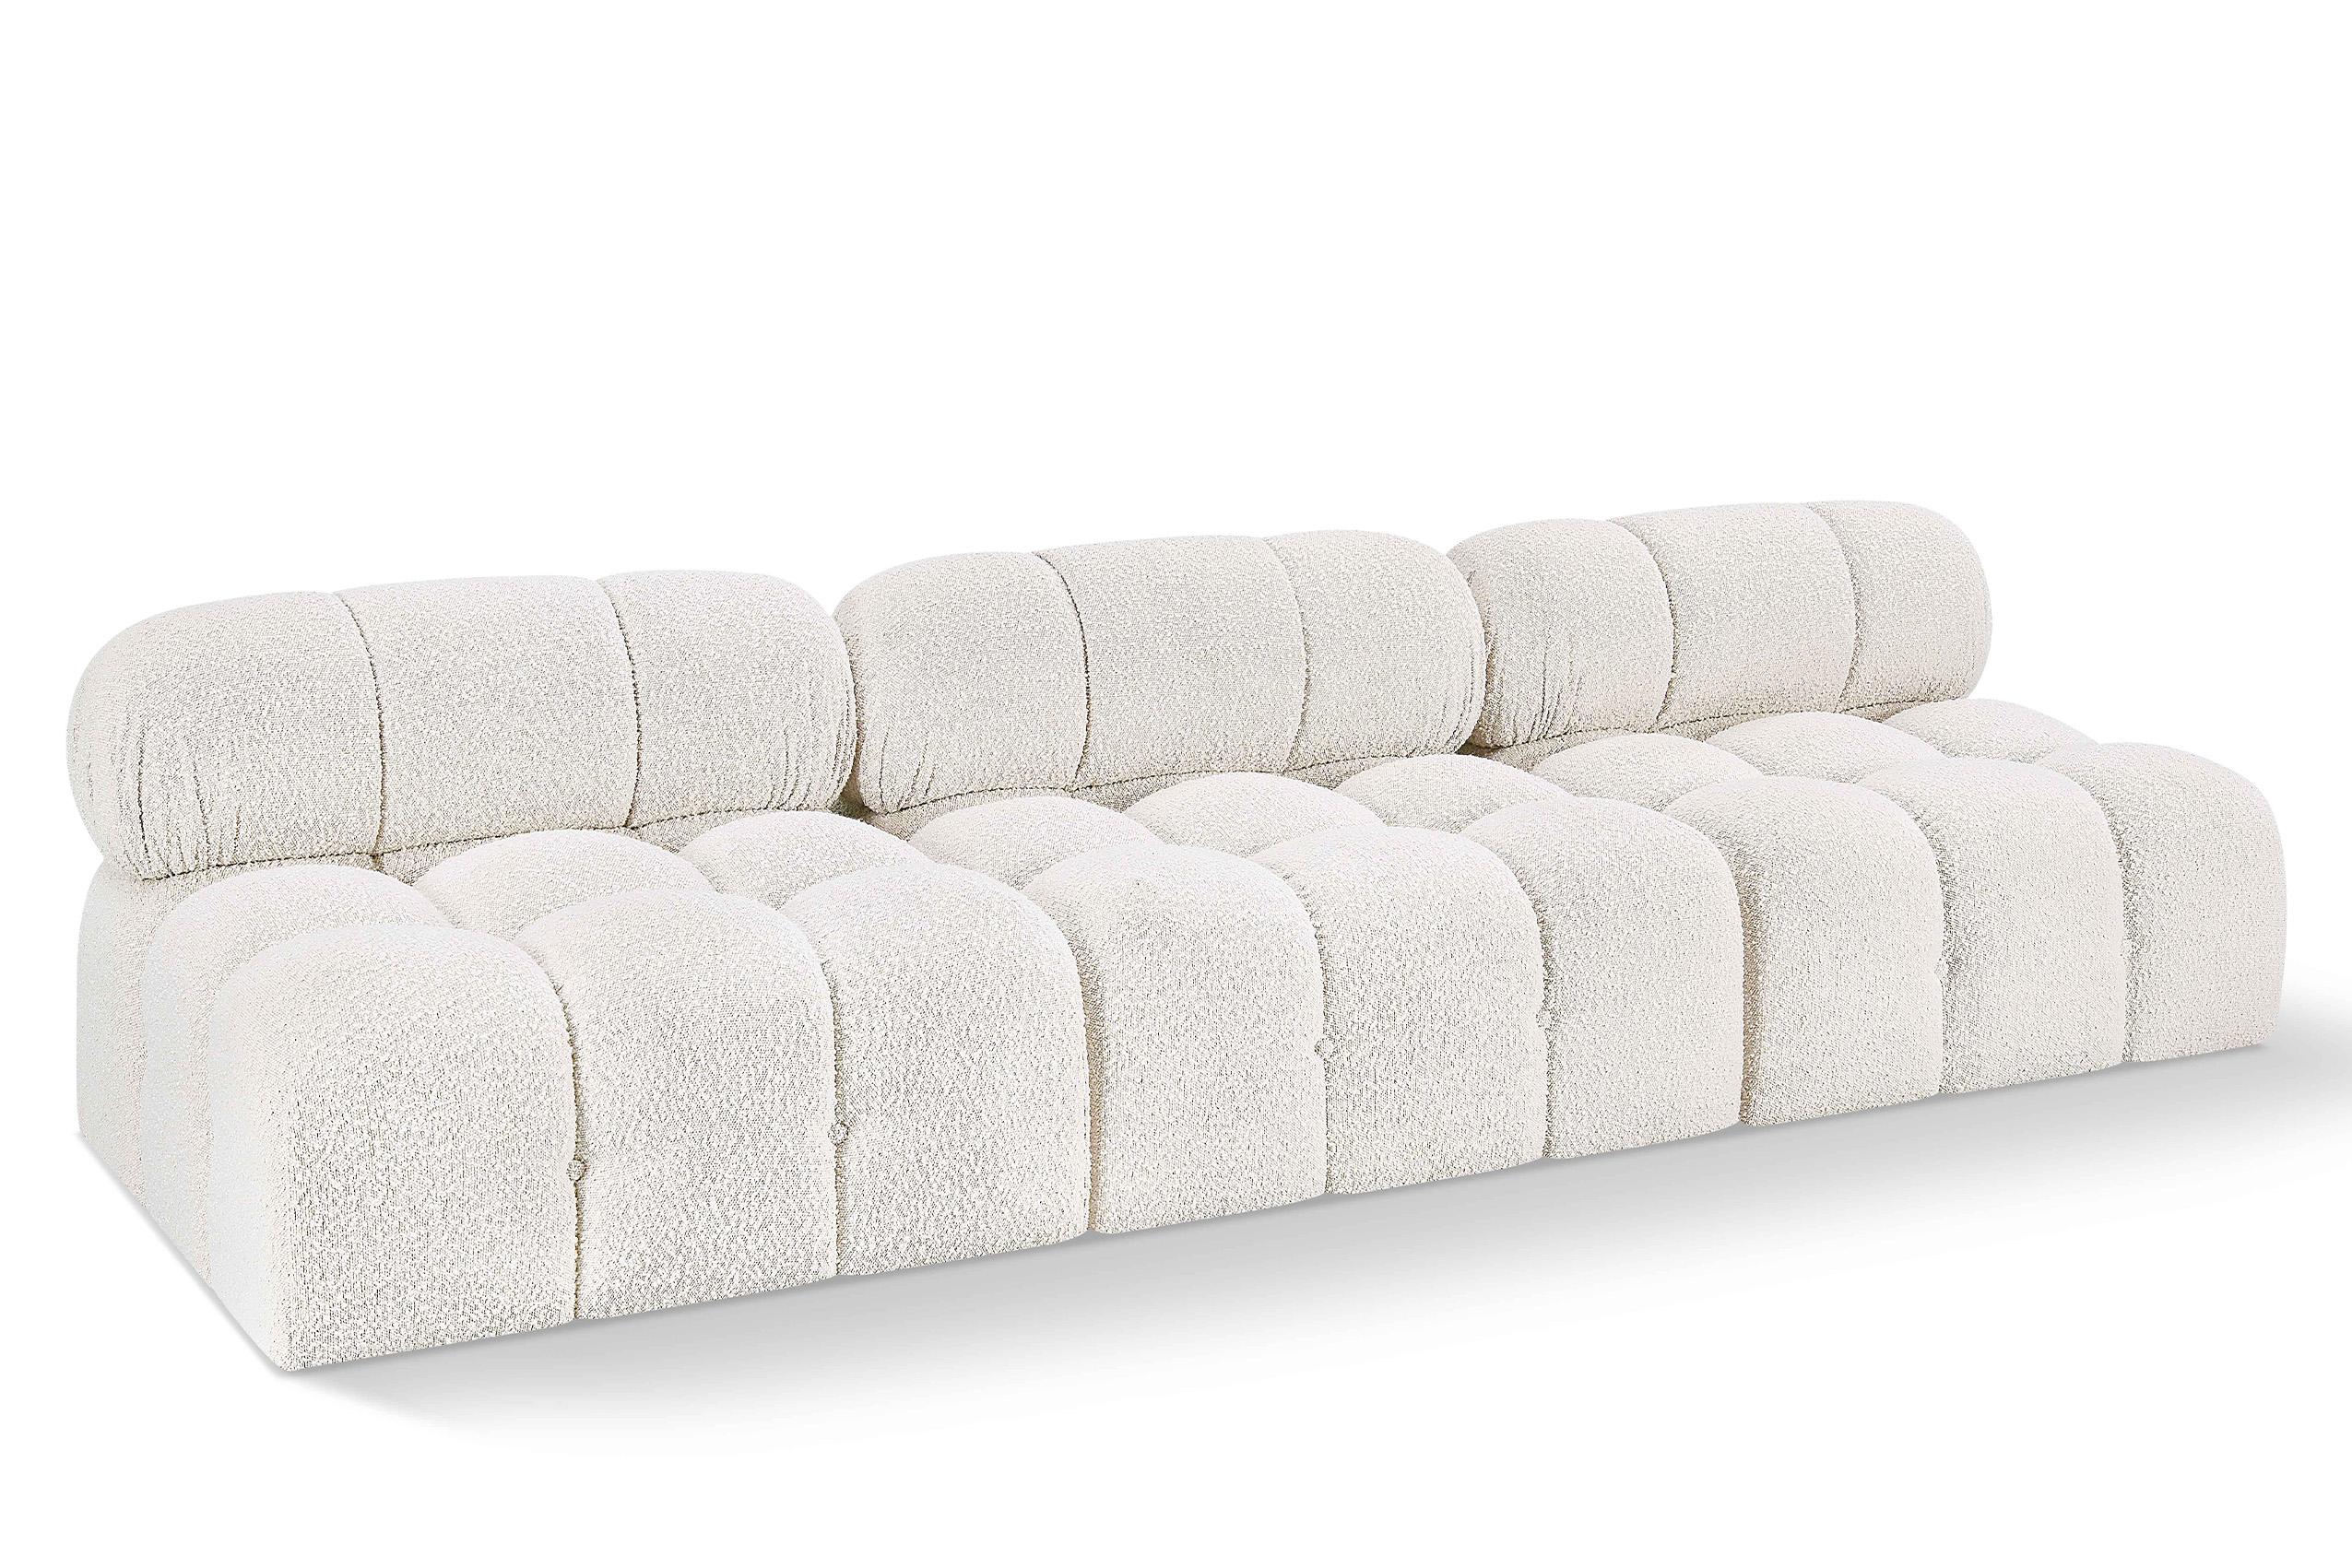 Contemporary, Modern Modular Sofa AMES 611Cream-S102B 611Cream-S102B in Cream 